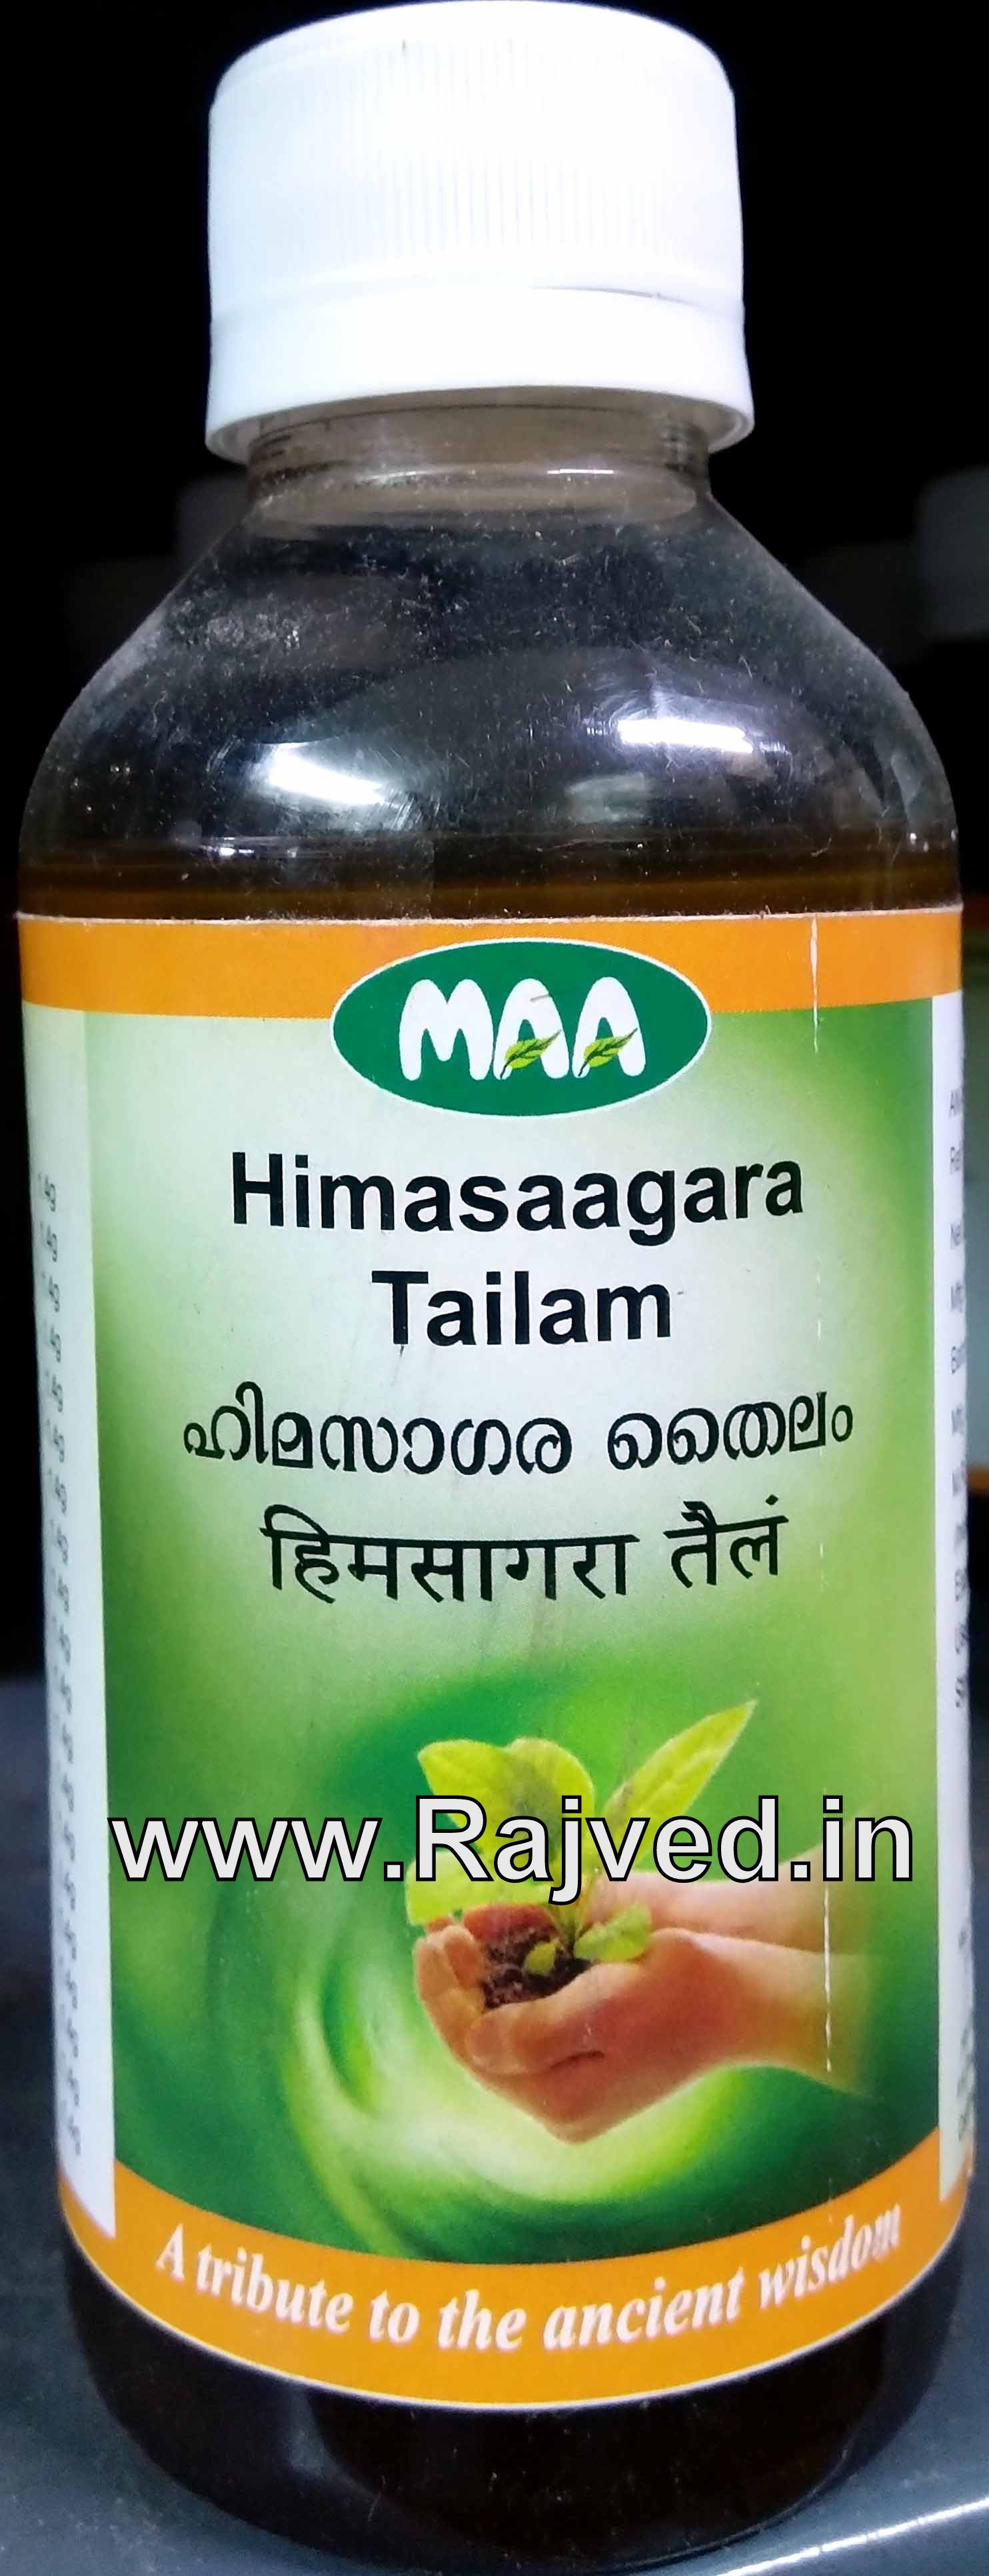 himasagar tailam 200 ml upto 15% off malabar ayurveda ashram